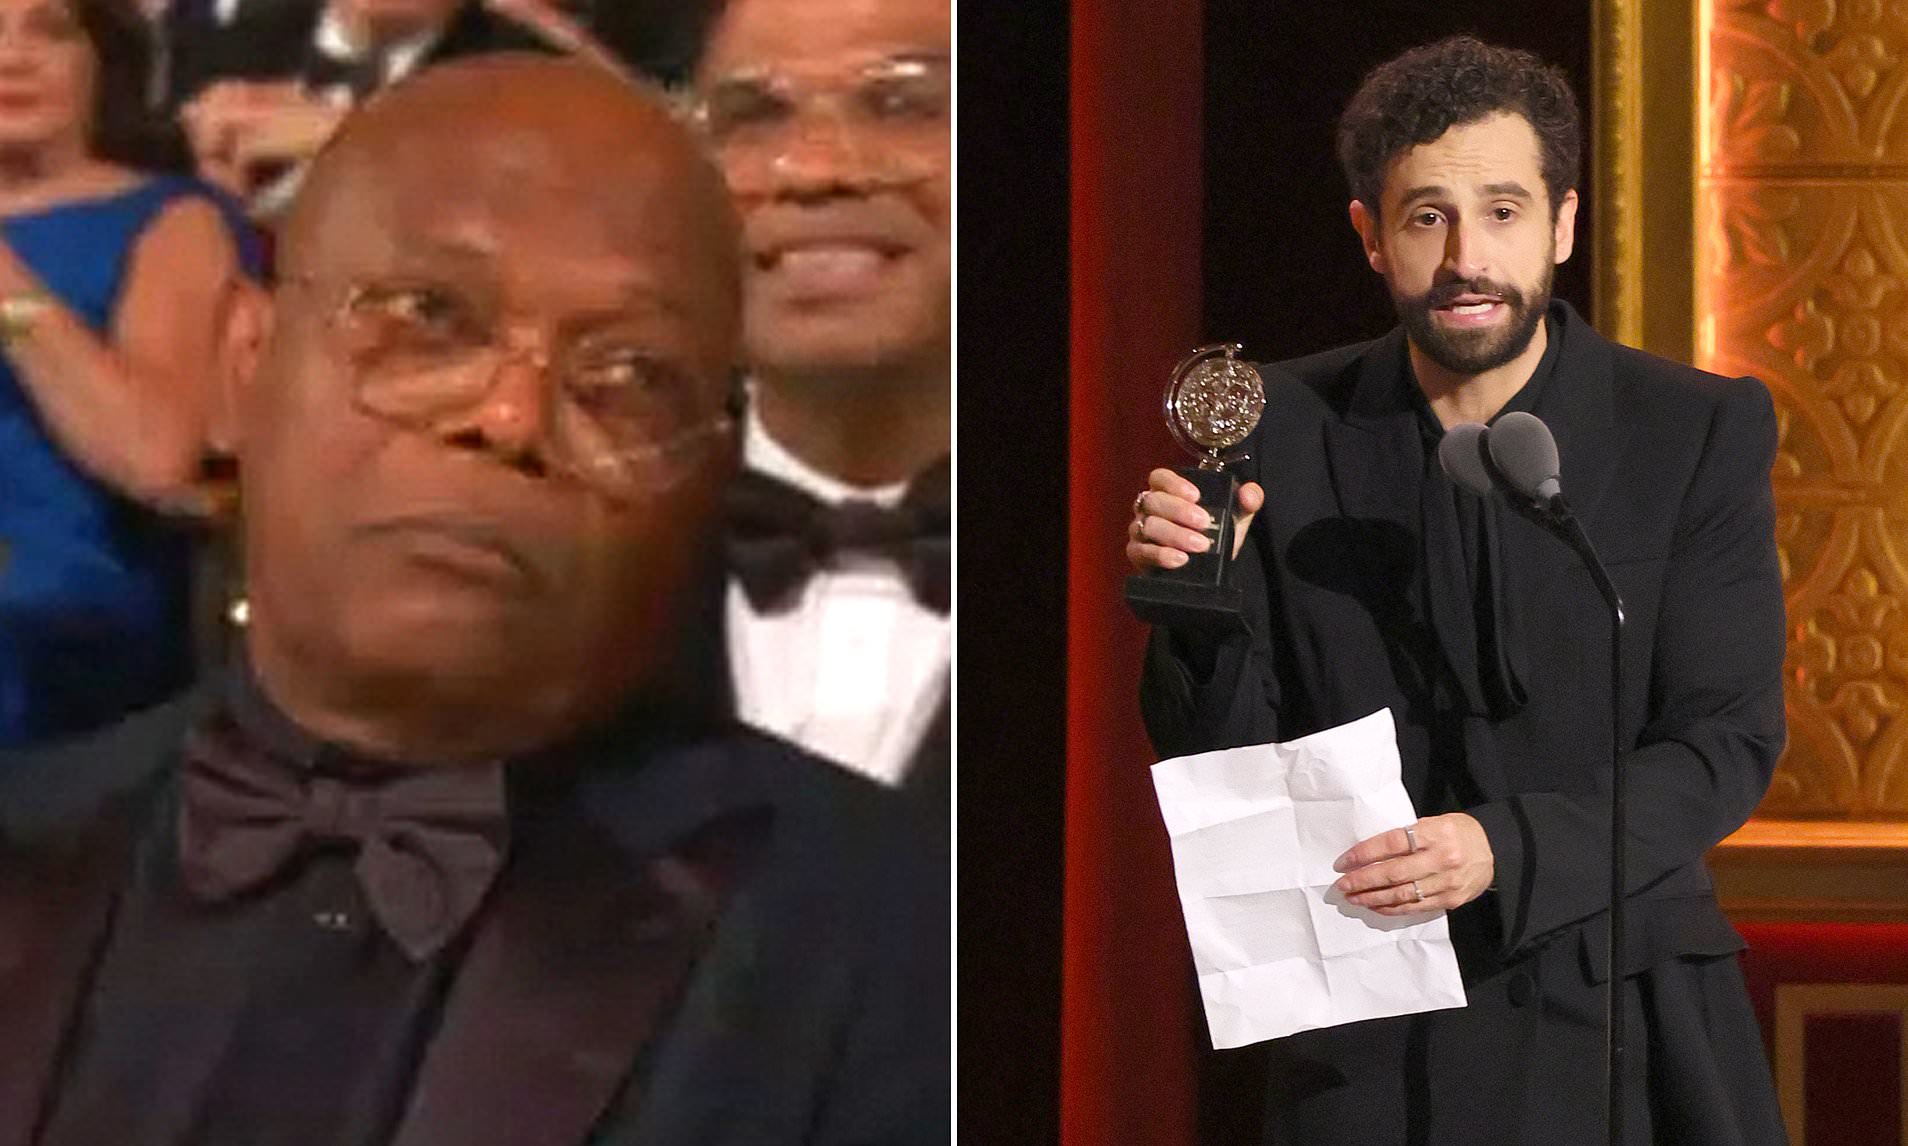 Samuel L Jackson Unimpressed Reaction To Tony Awards Loss Goes Viral, Garnering Online Attention